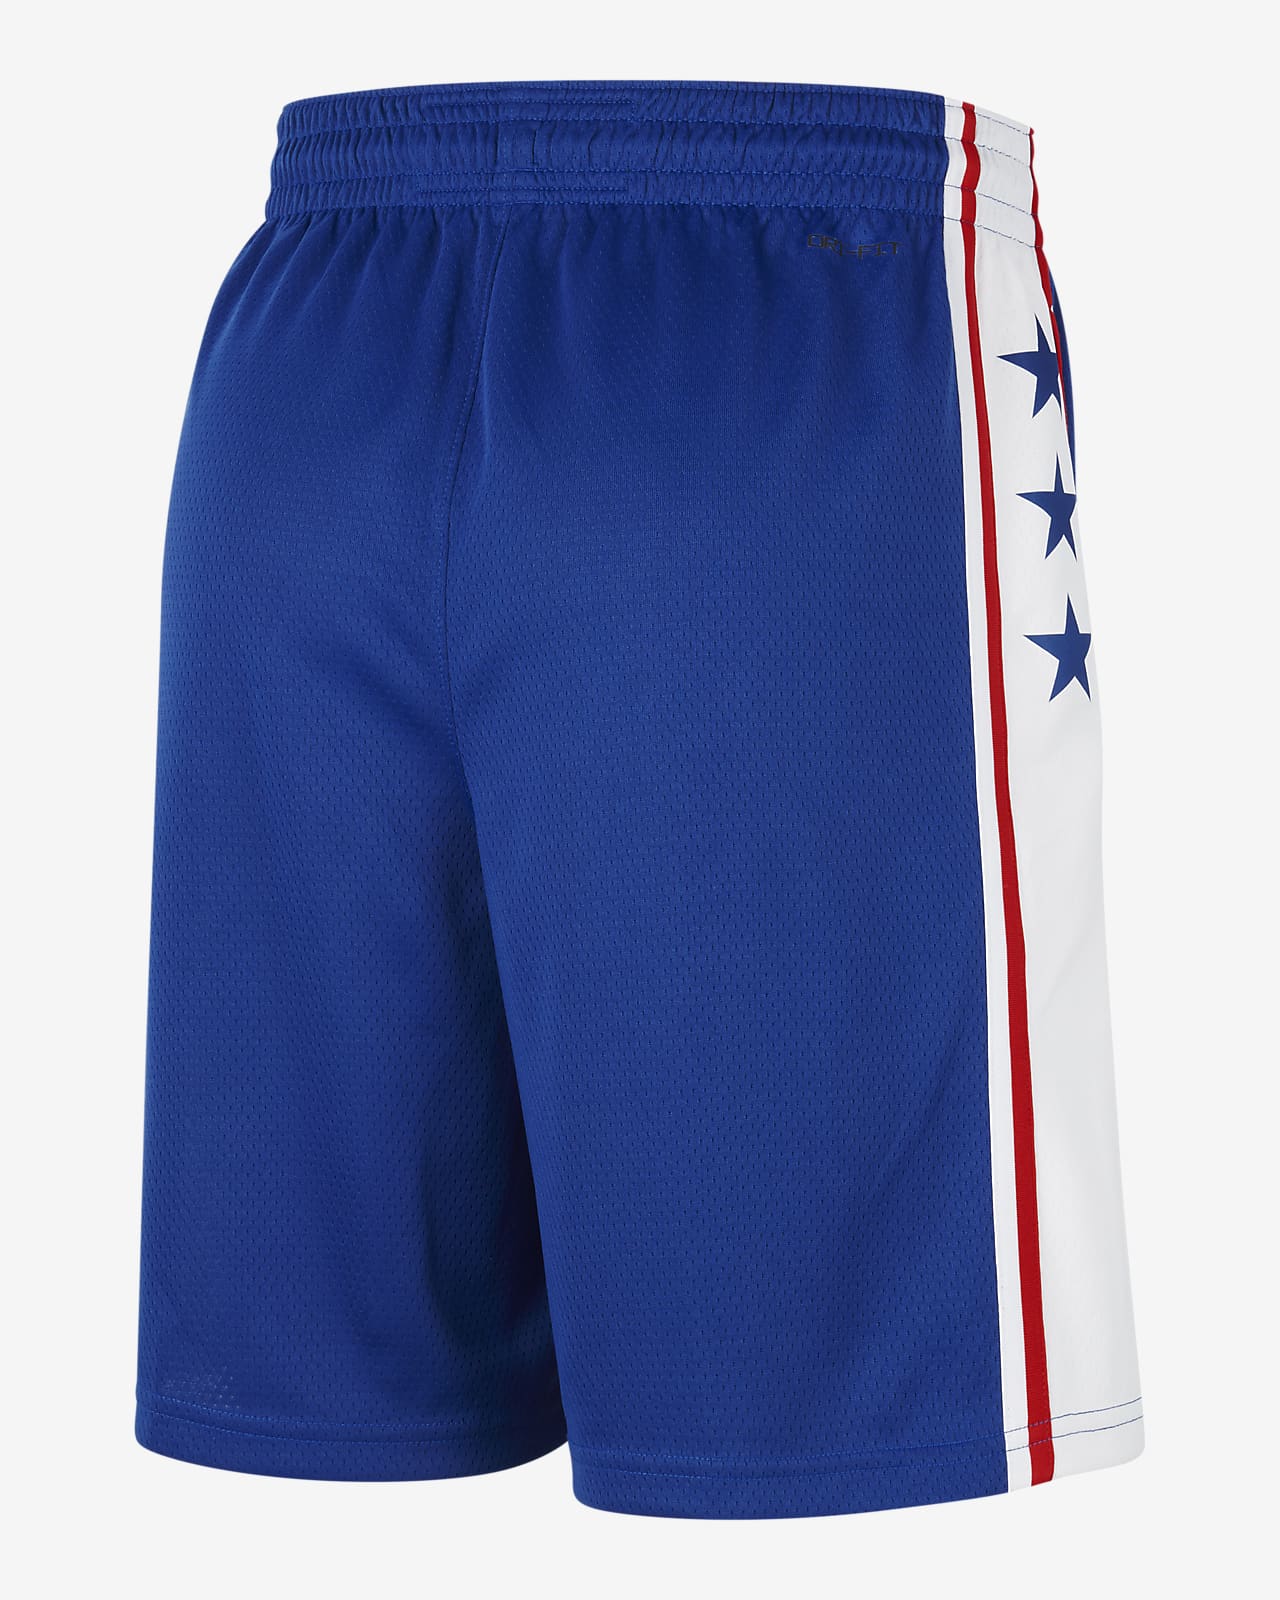 Nike Men's Icon Basketball Shorts, Dri-FIT